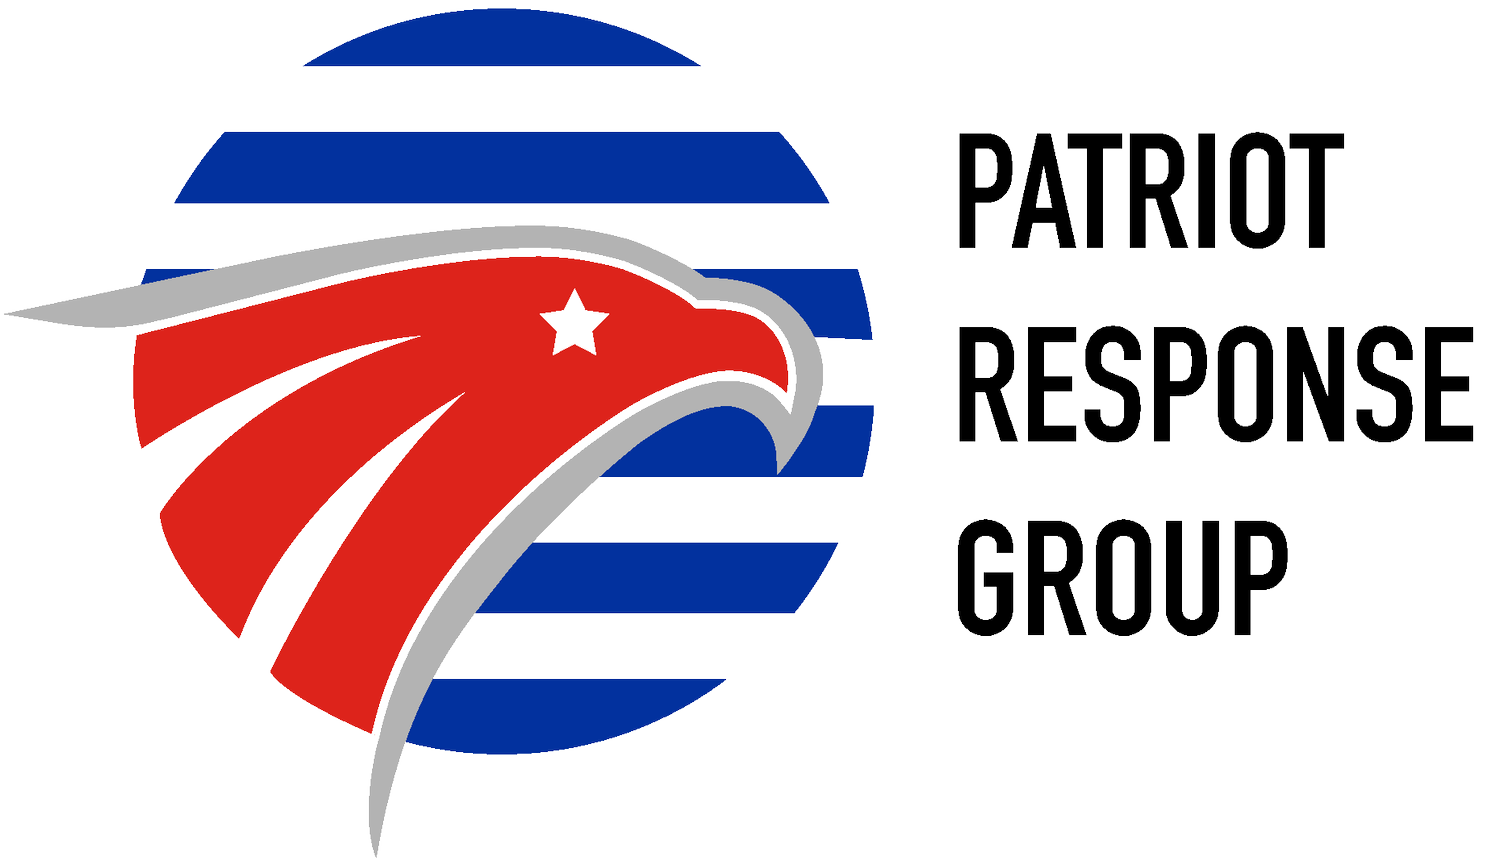 Patriot Response Group